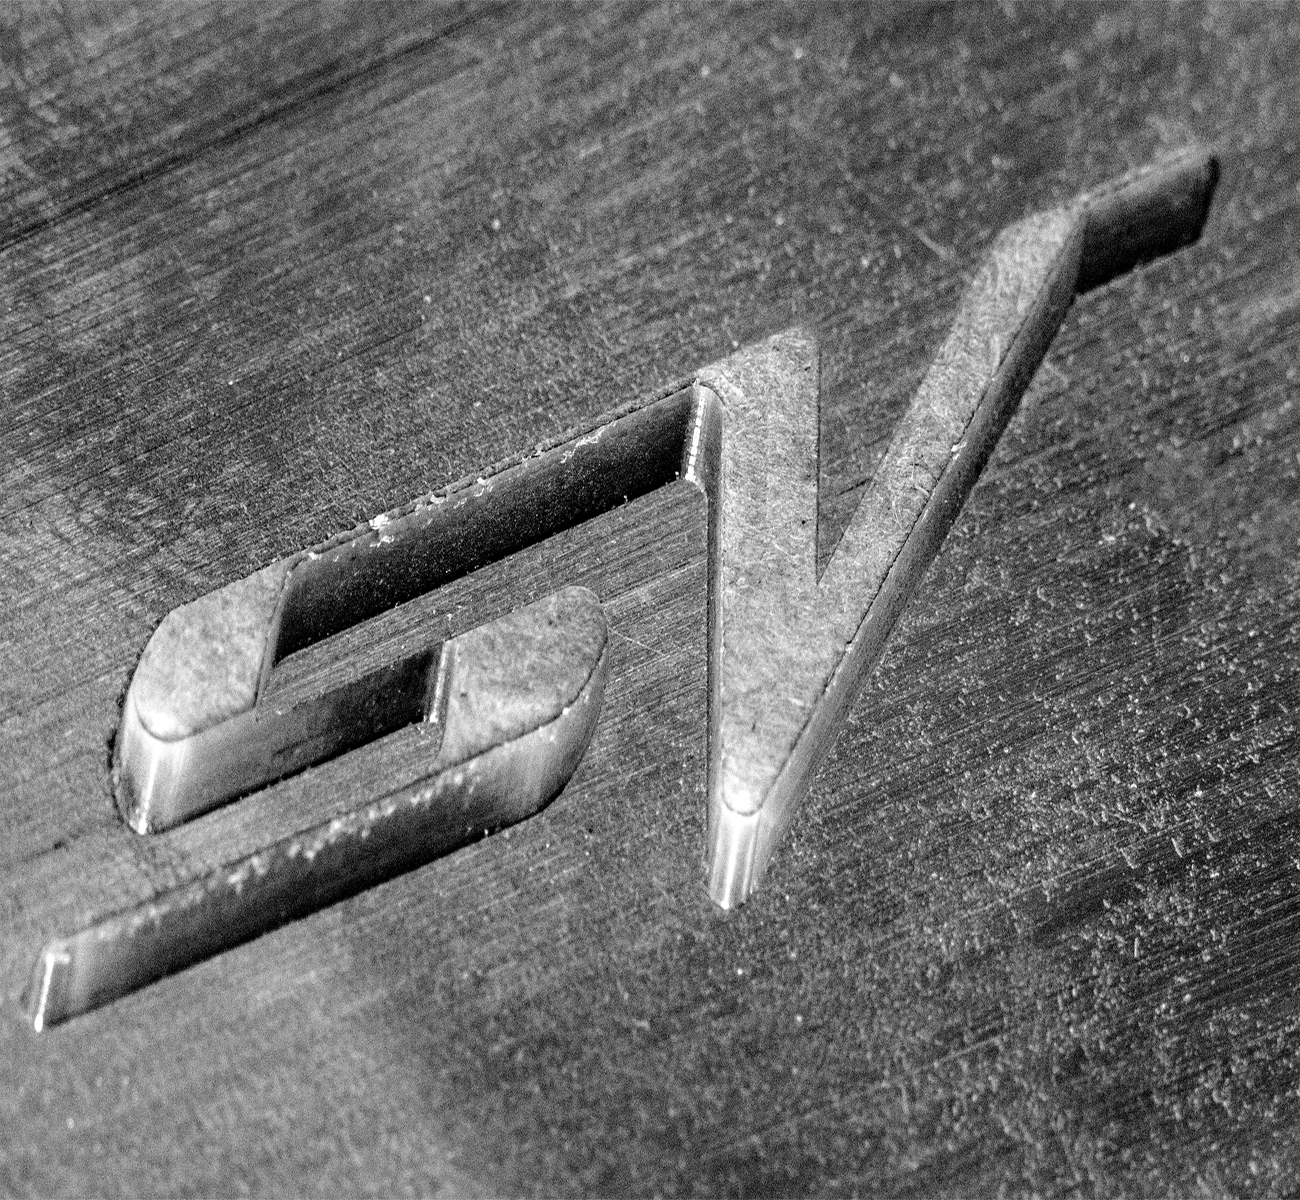 SV yachts logo cut into metal